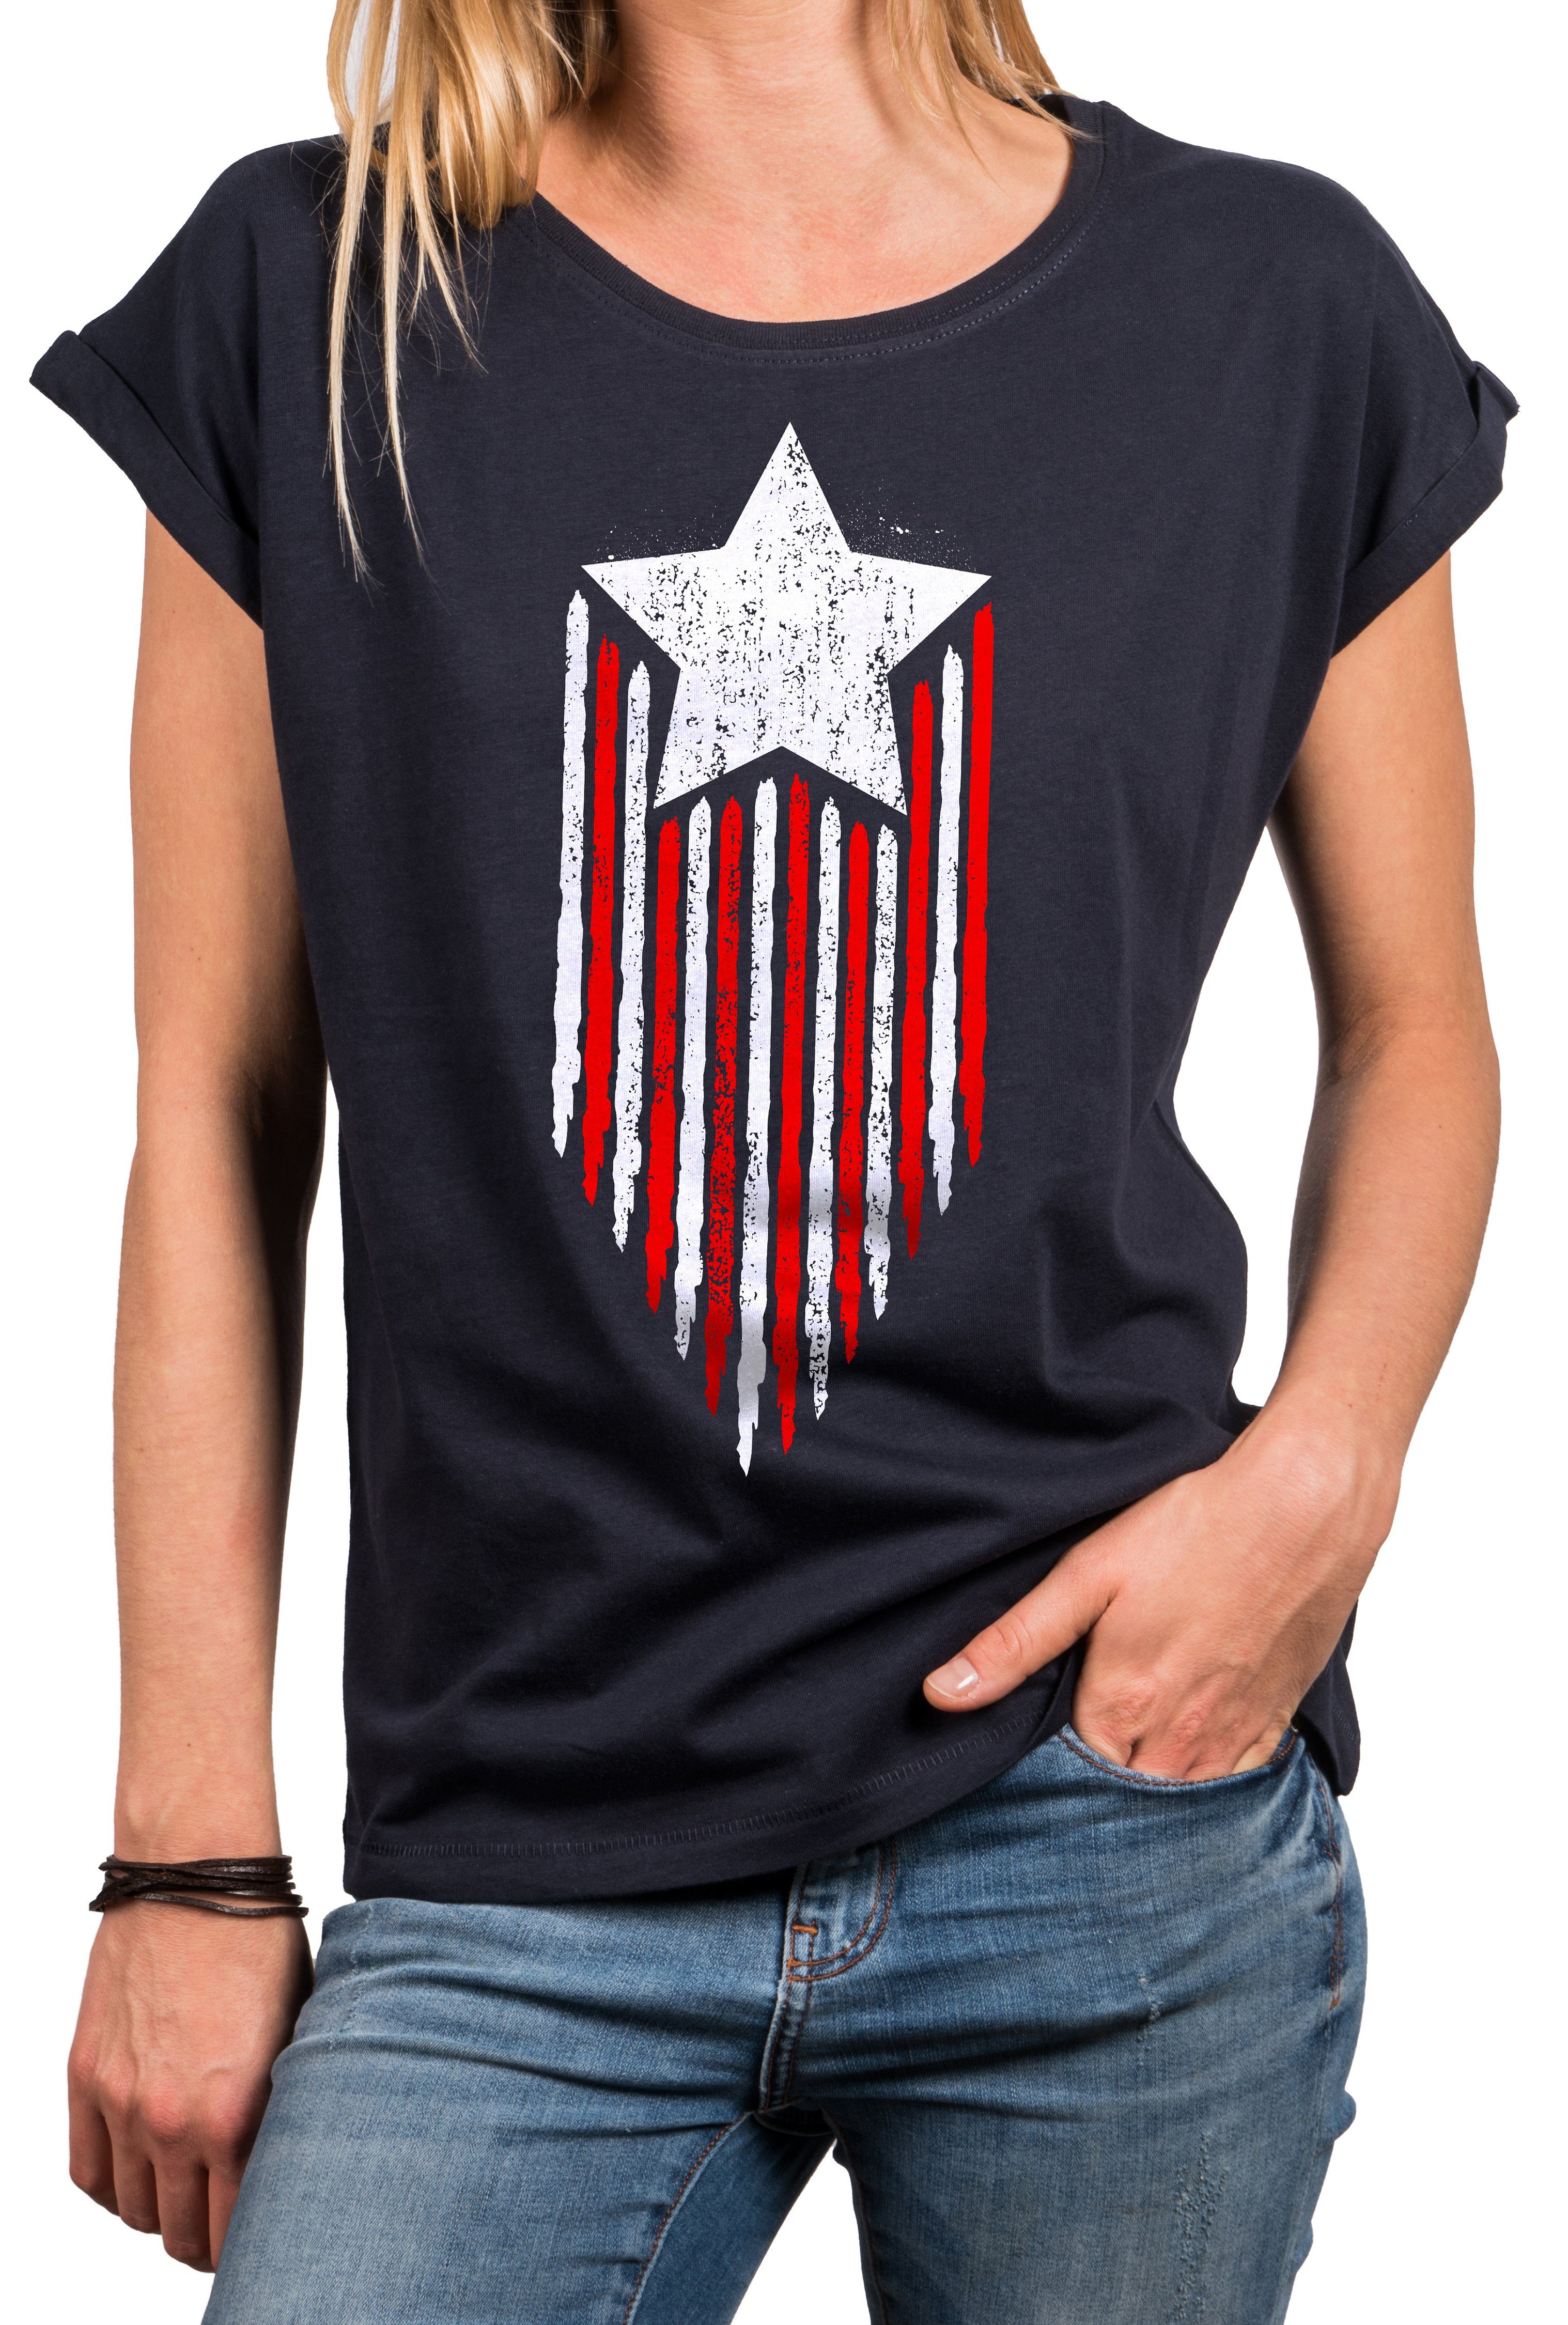 MAKAYA Print-Shirt Vintage Amerika Fahne amerikanische Flagge Damen Top Kurzarmshirt, große Größen Blau